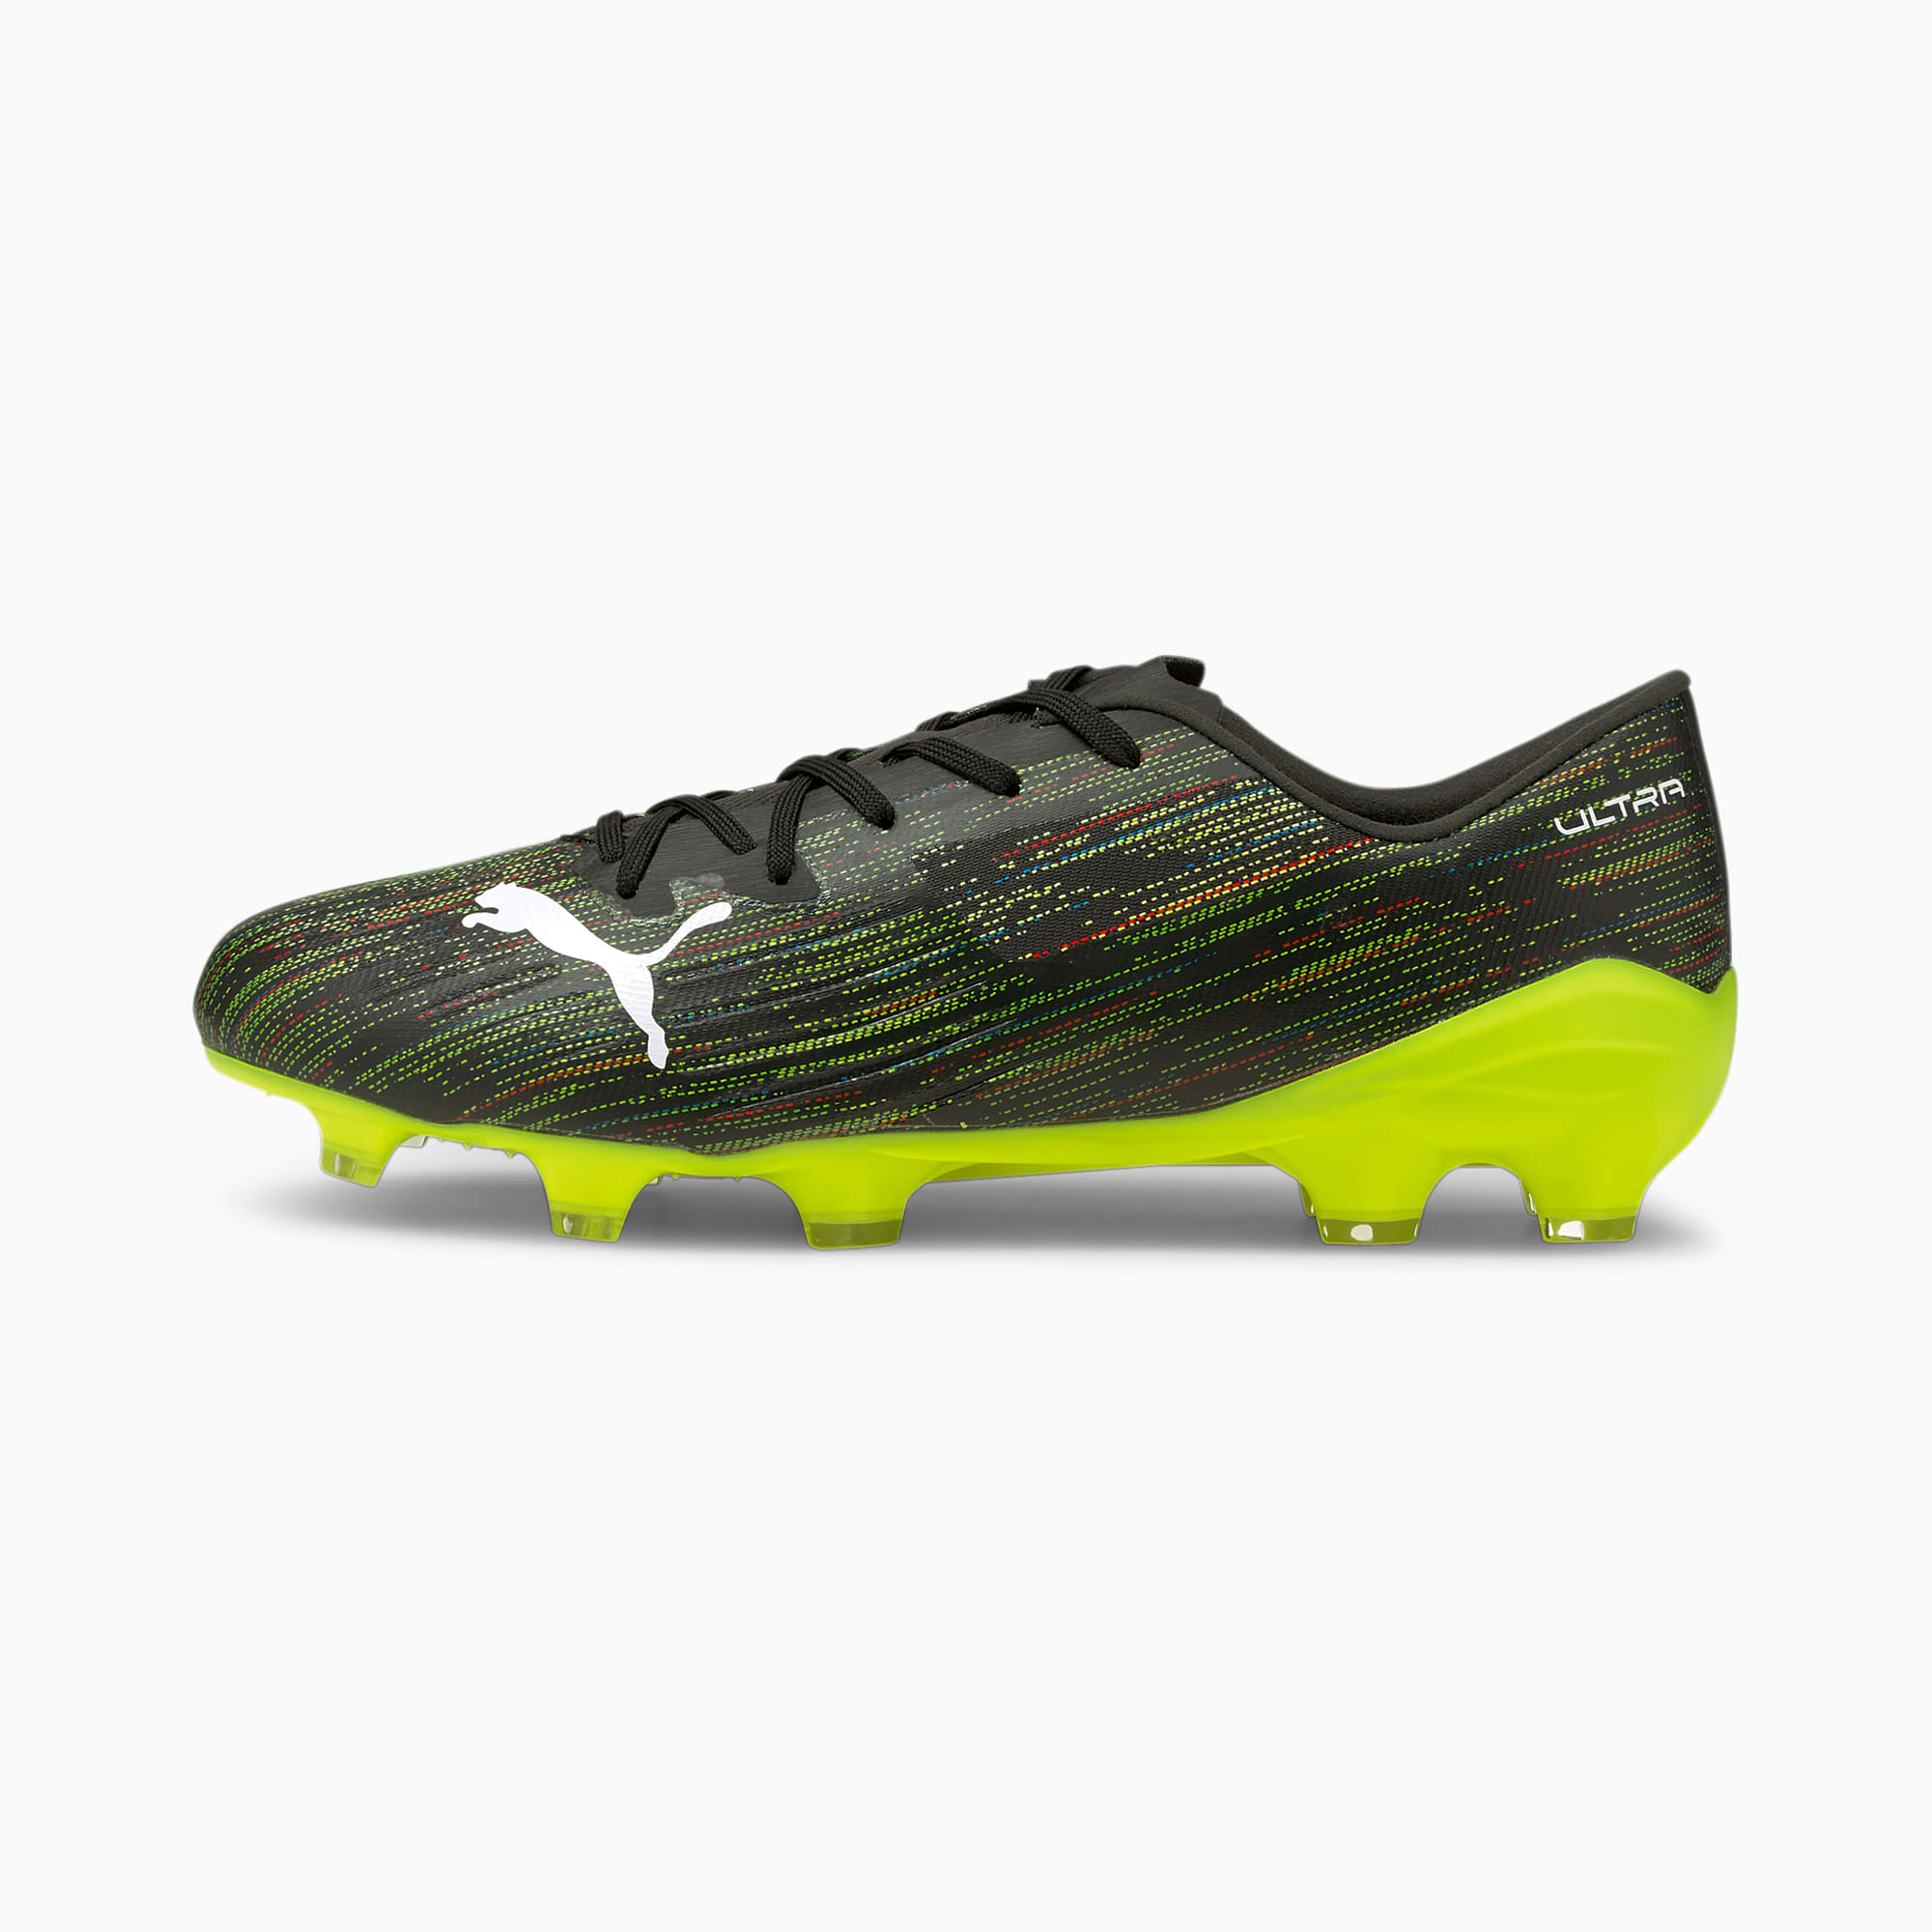 PUMA Chaussures de football ULTRA 2.2 FG/AG homme, Noir/Jaune/Blanc, Taille 39, Chaussures